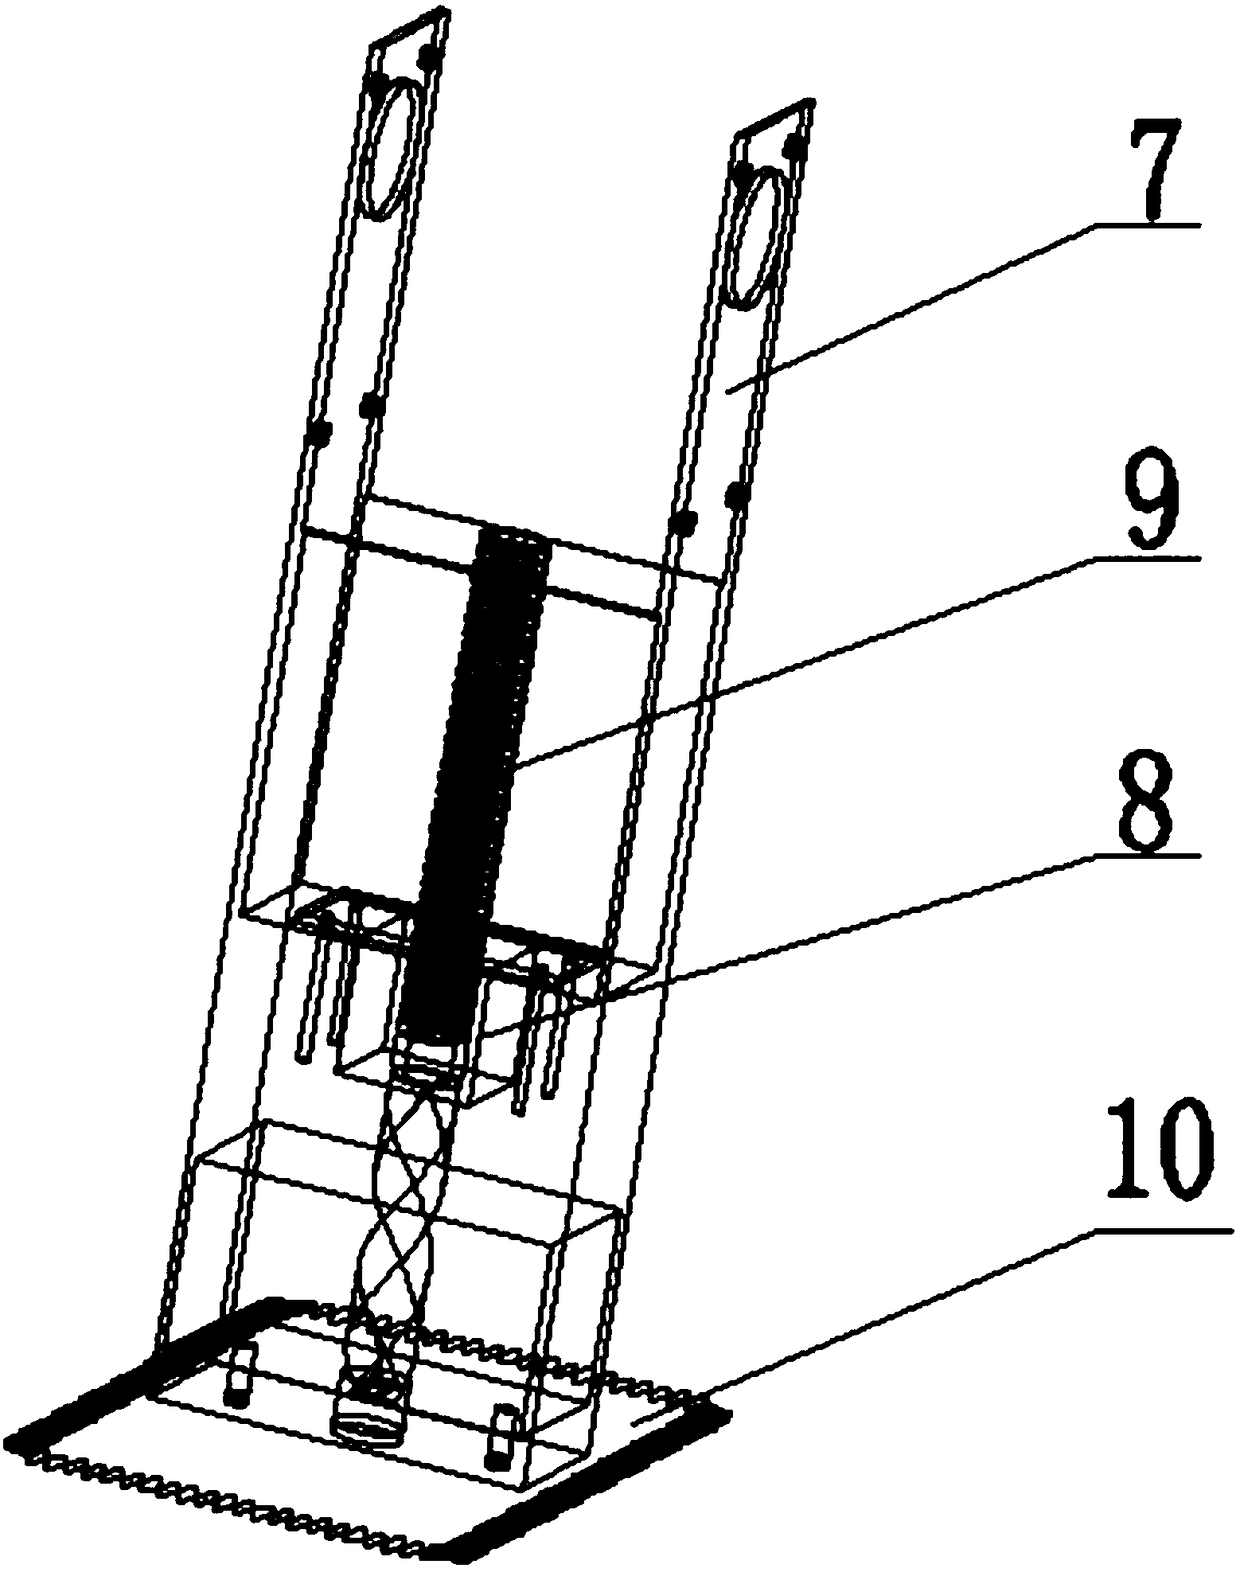 Mechanical leg capable of drilling wall and robot based on same